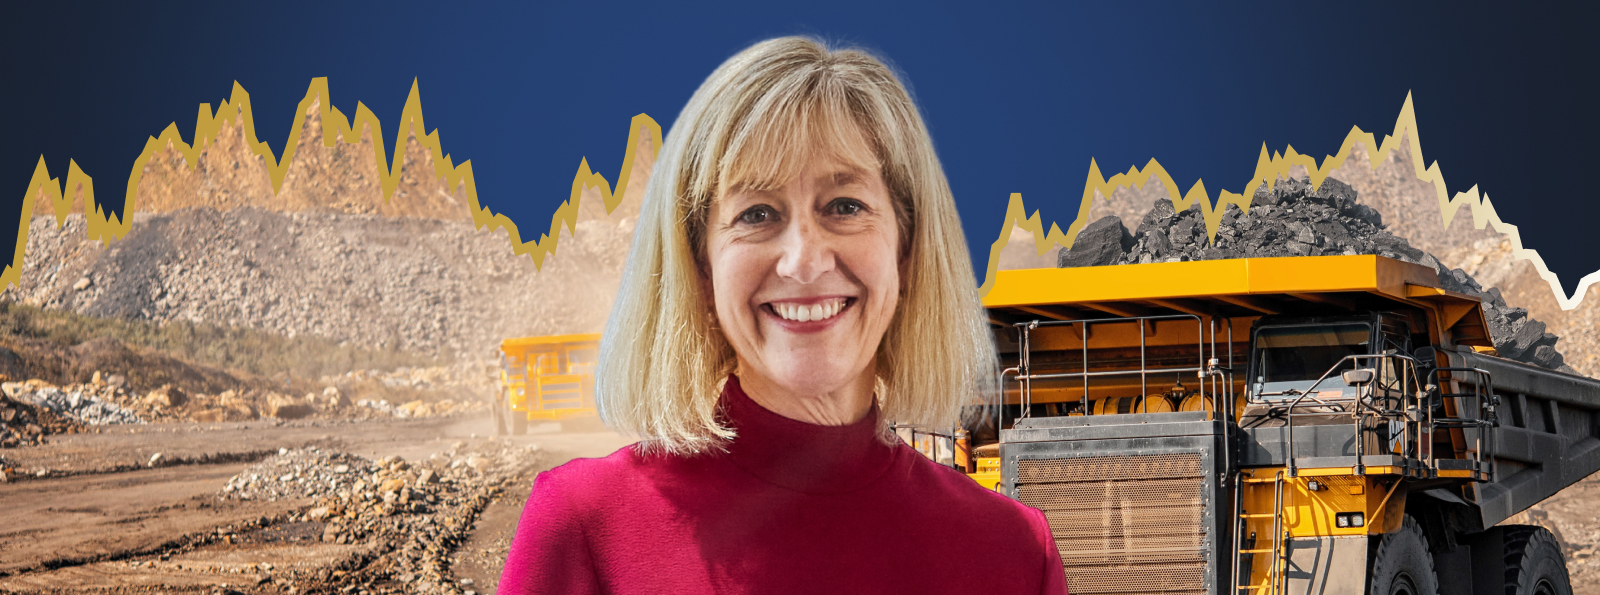 Catherine Allfrey – Portfolio Manager and Principal at WaveStone Capital